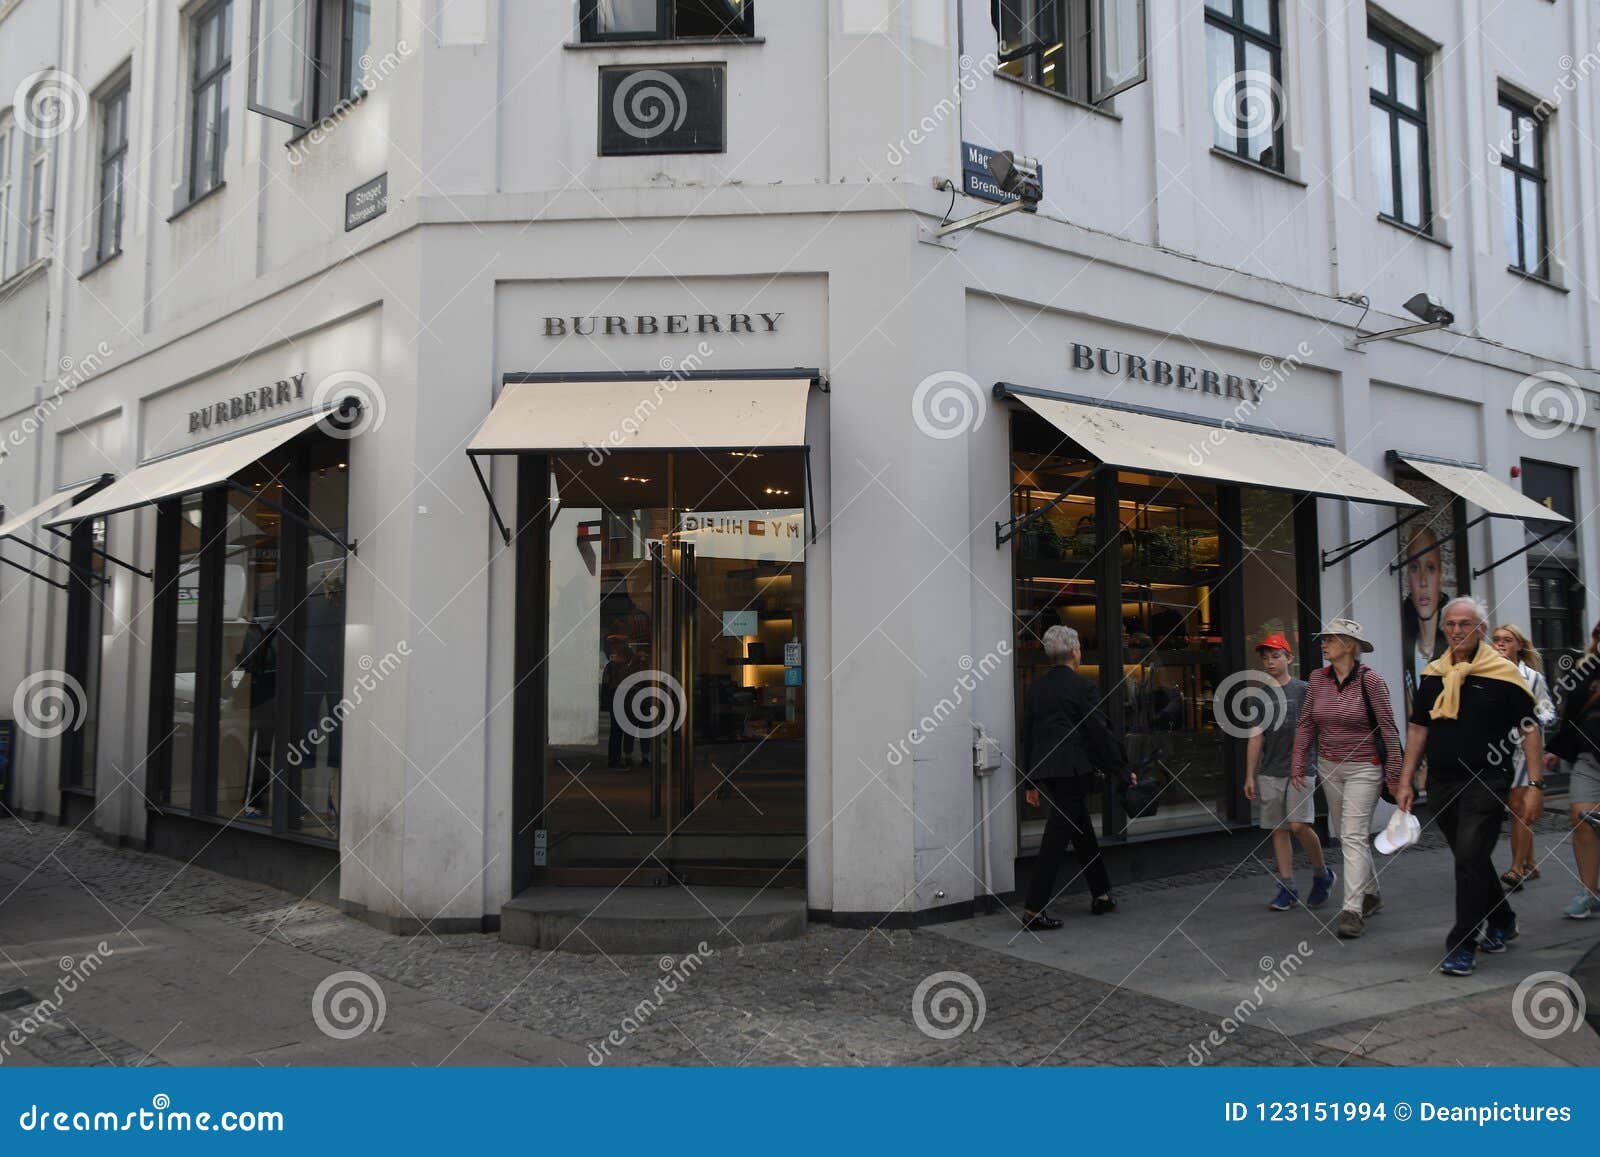 BURBERRY in COPENHAGEN DENMARK Editorial Stock Image - Image of shopeprs, 123151994